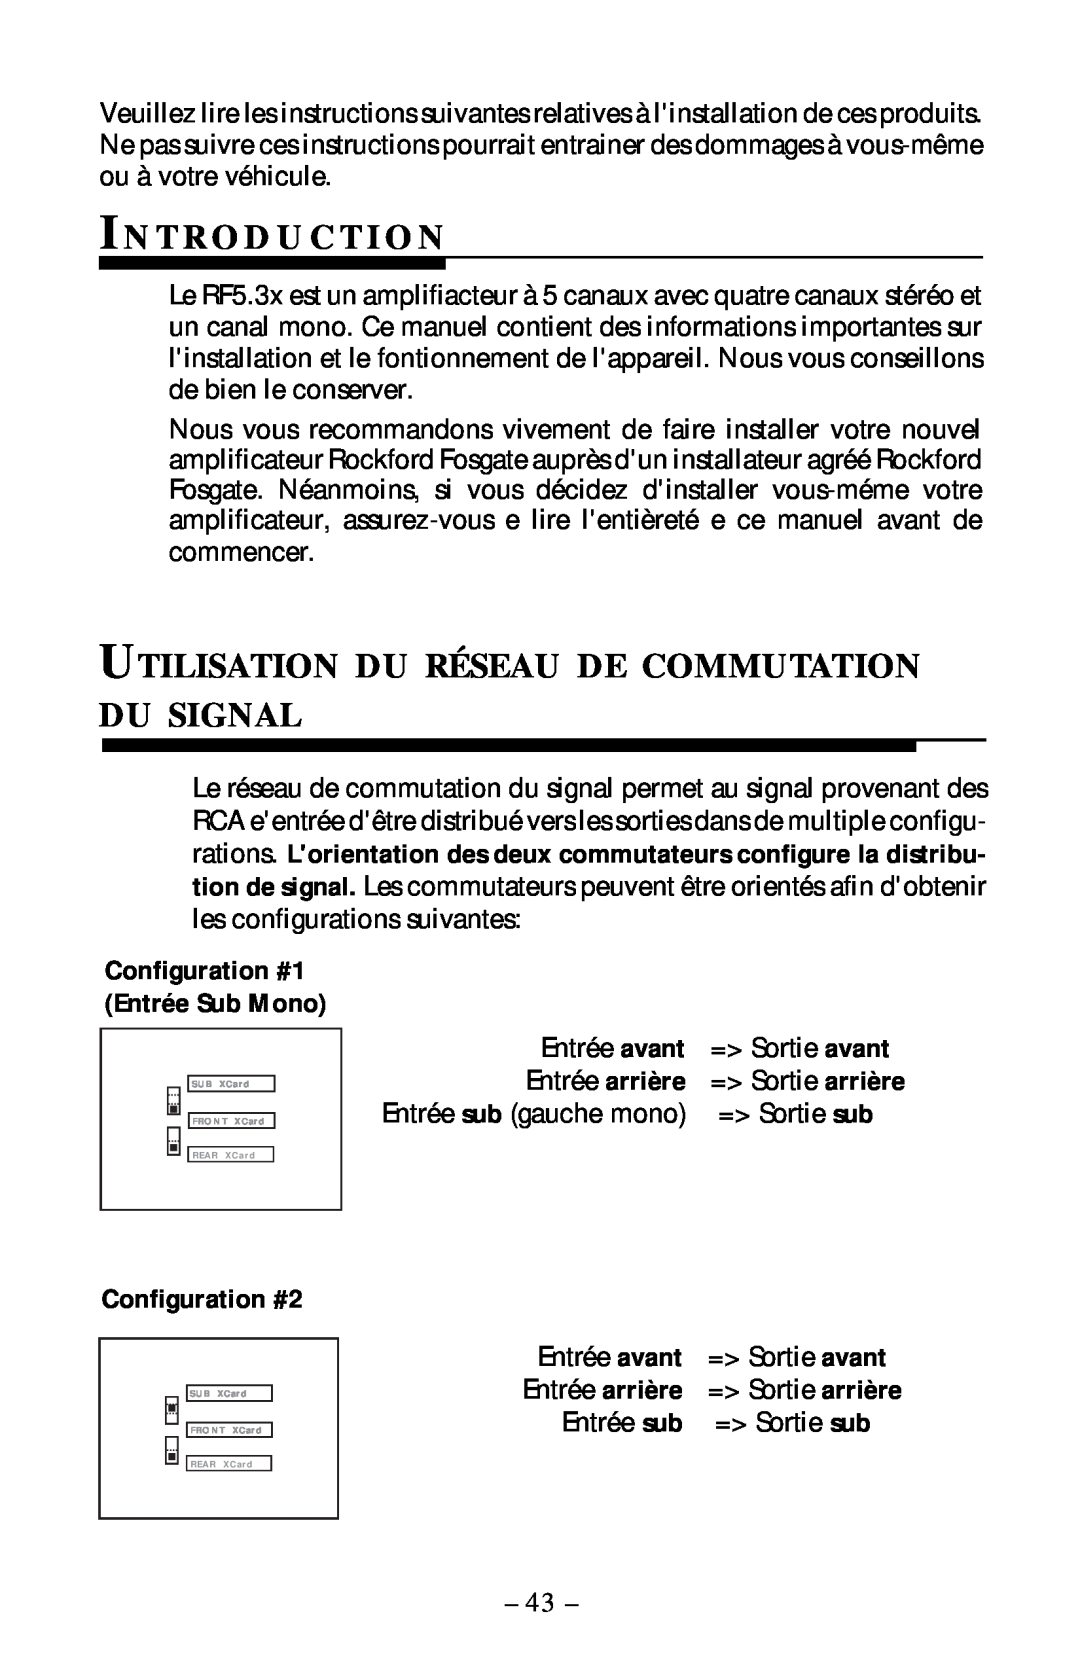 Rockford Fosgate 5.3x manual Utilisation Du Réseau De Commutation Du Signal, In T R O D U C T I O N, Configuration #2 